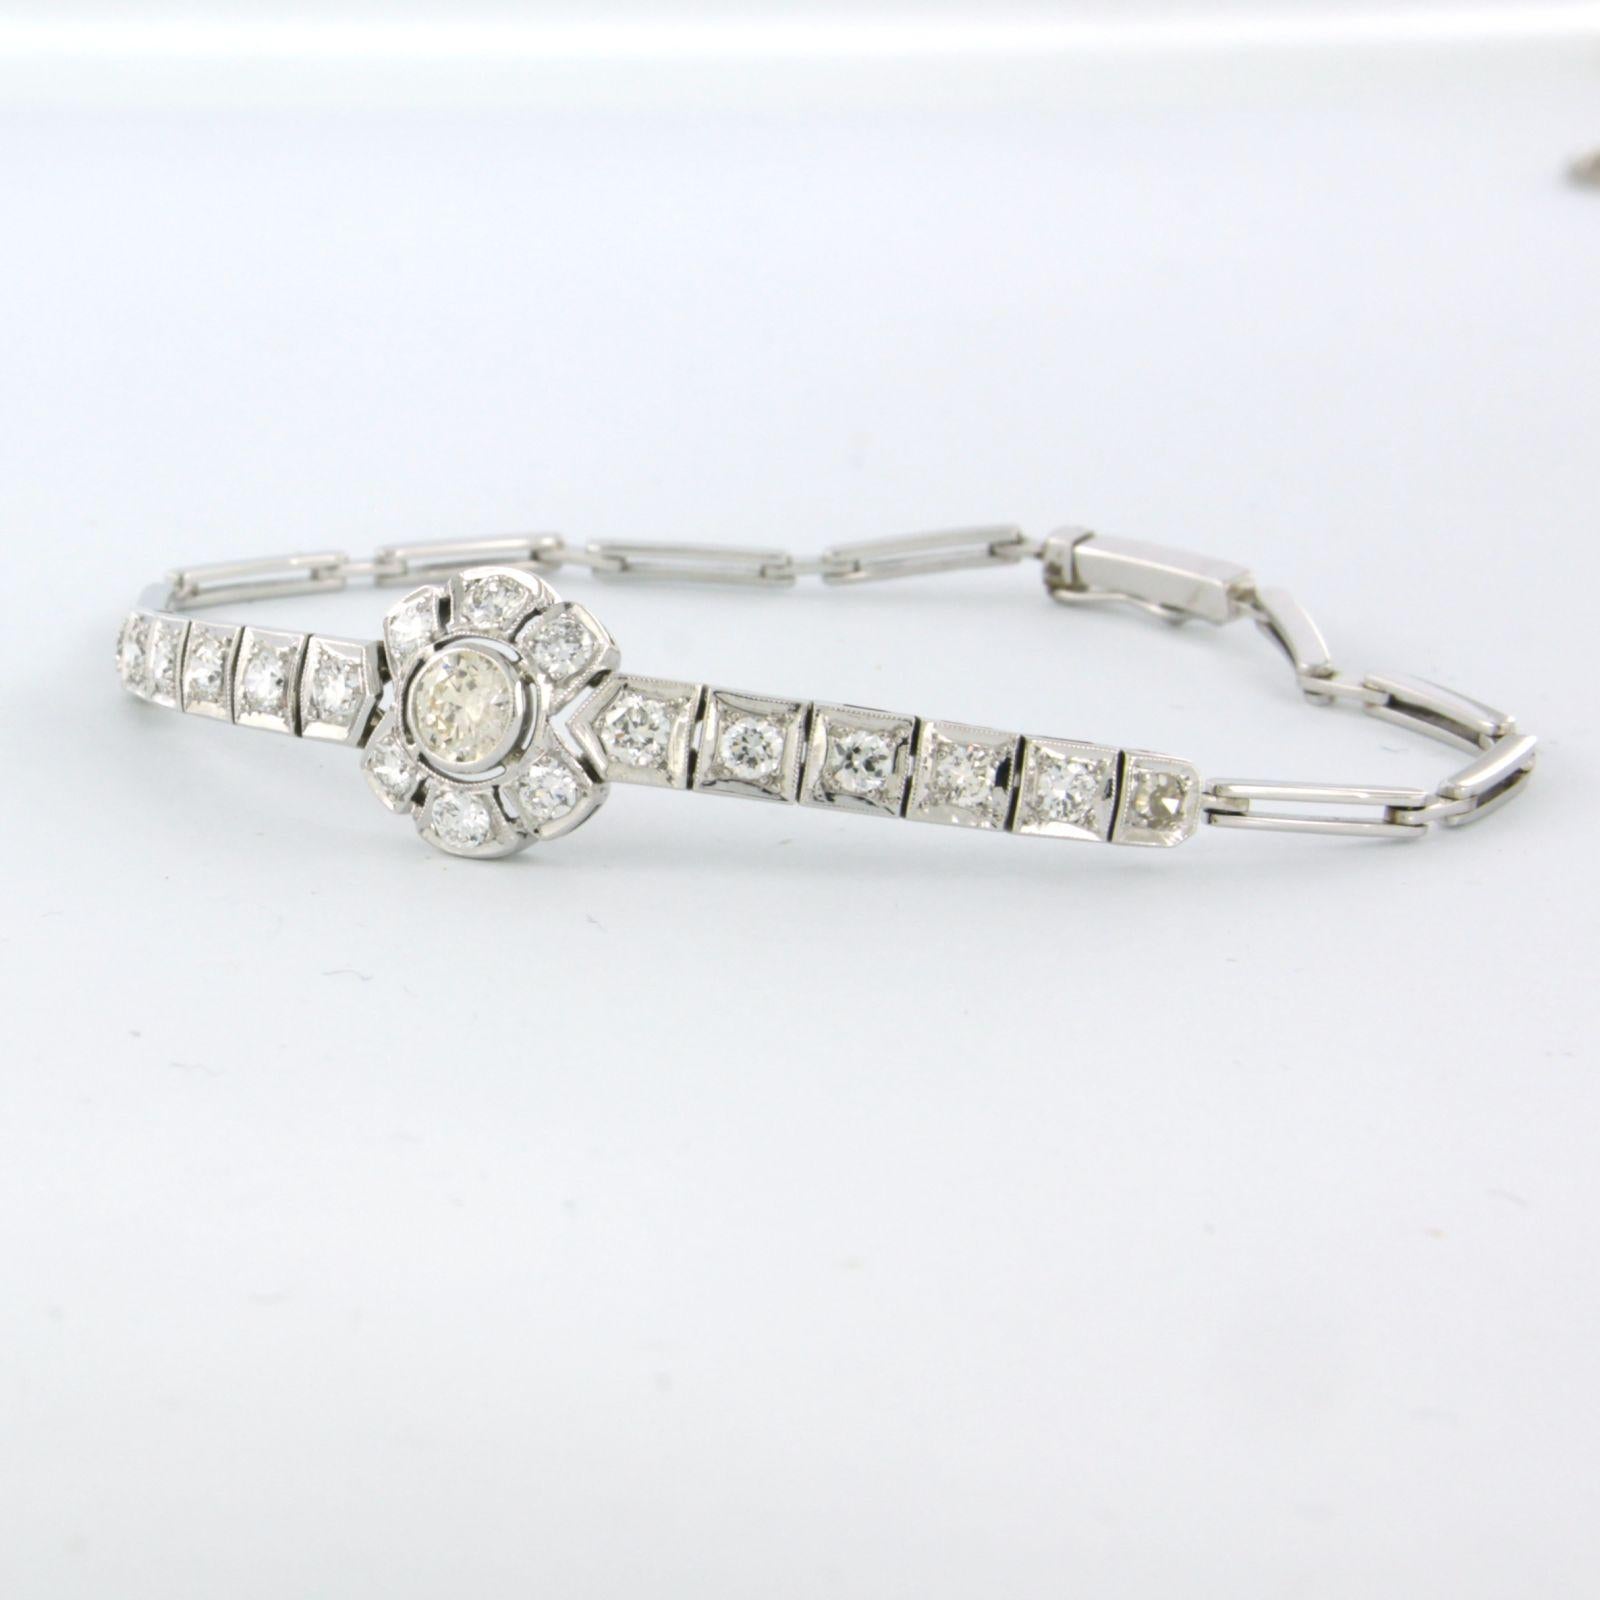 Bracelet with Diamond 14k white gold For Sale 2